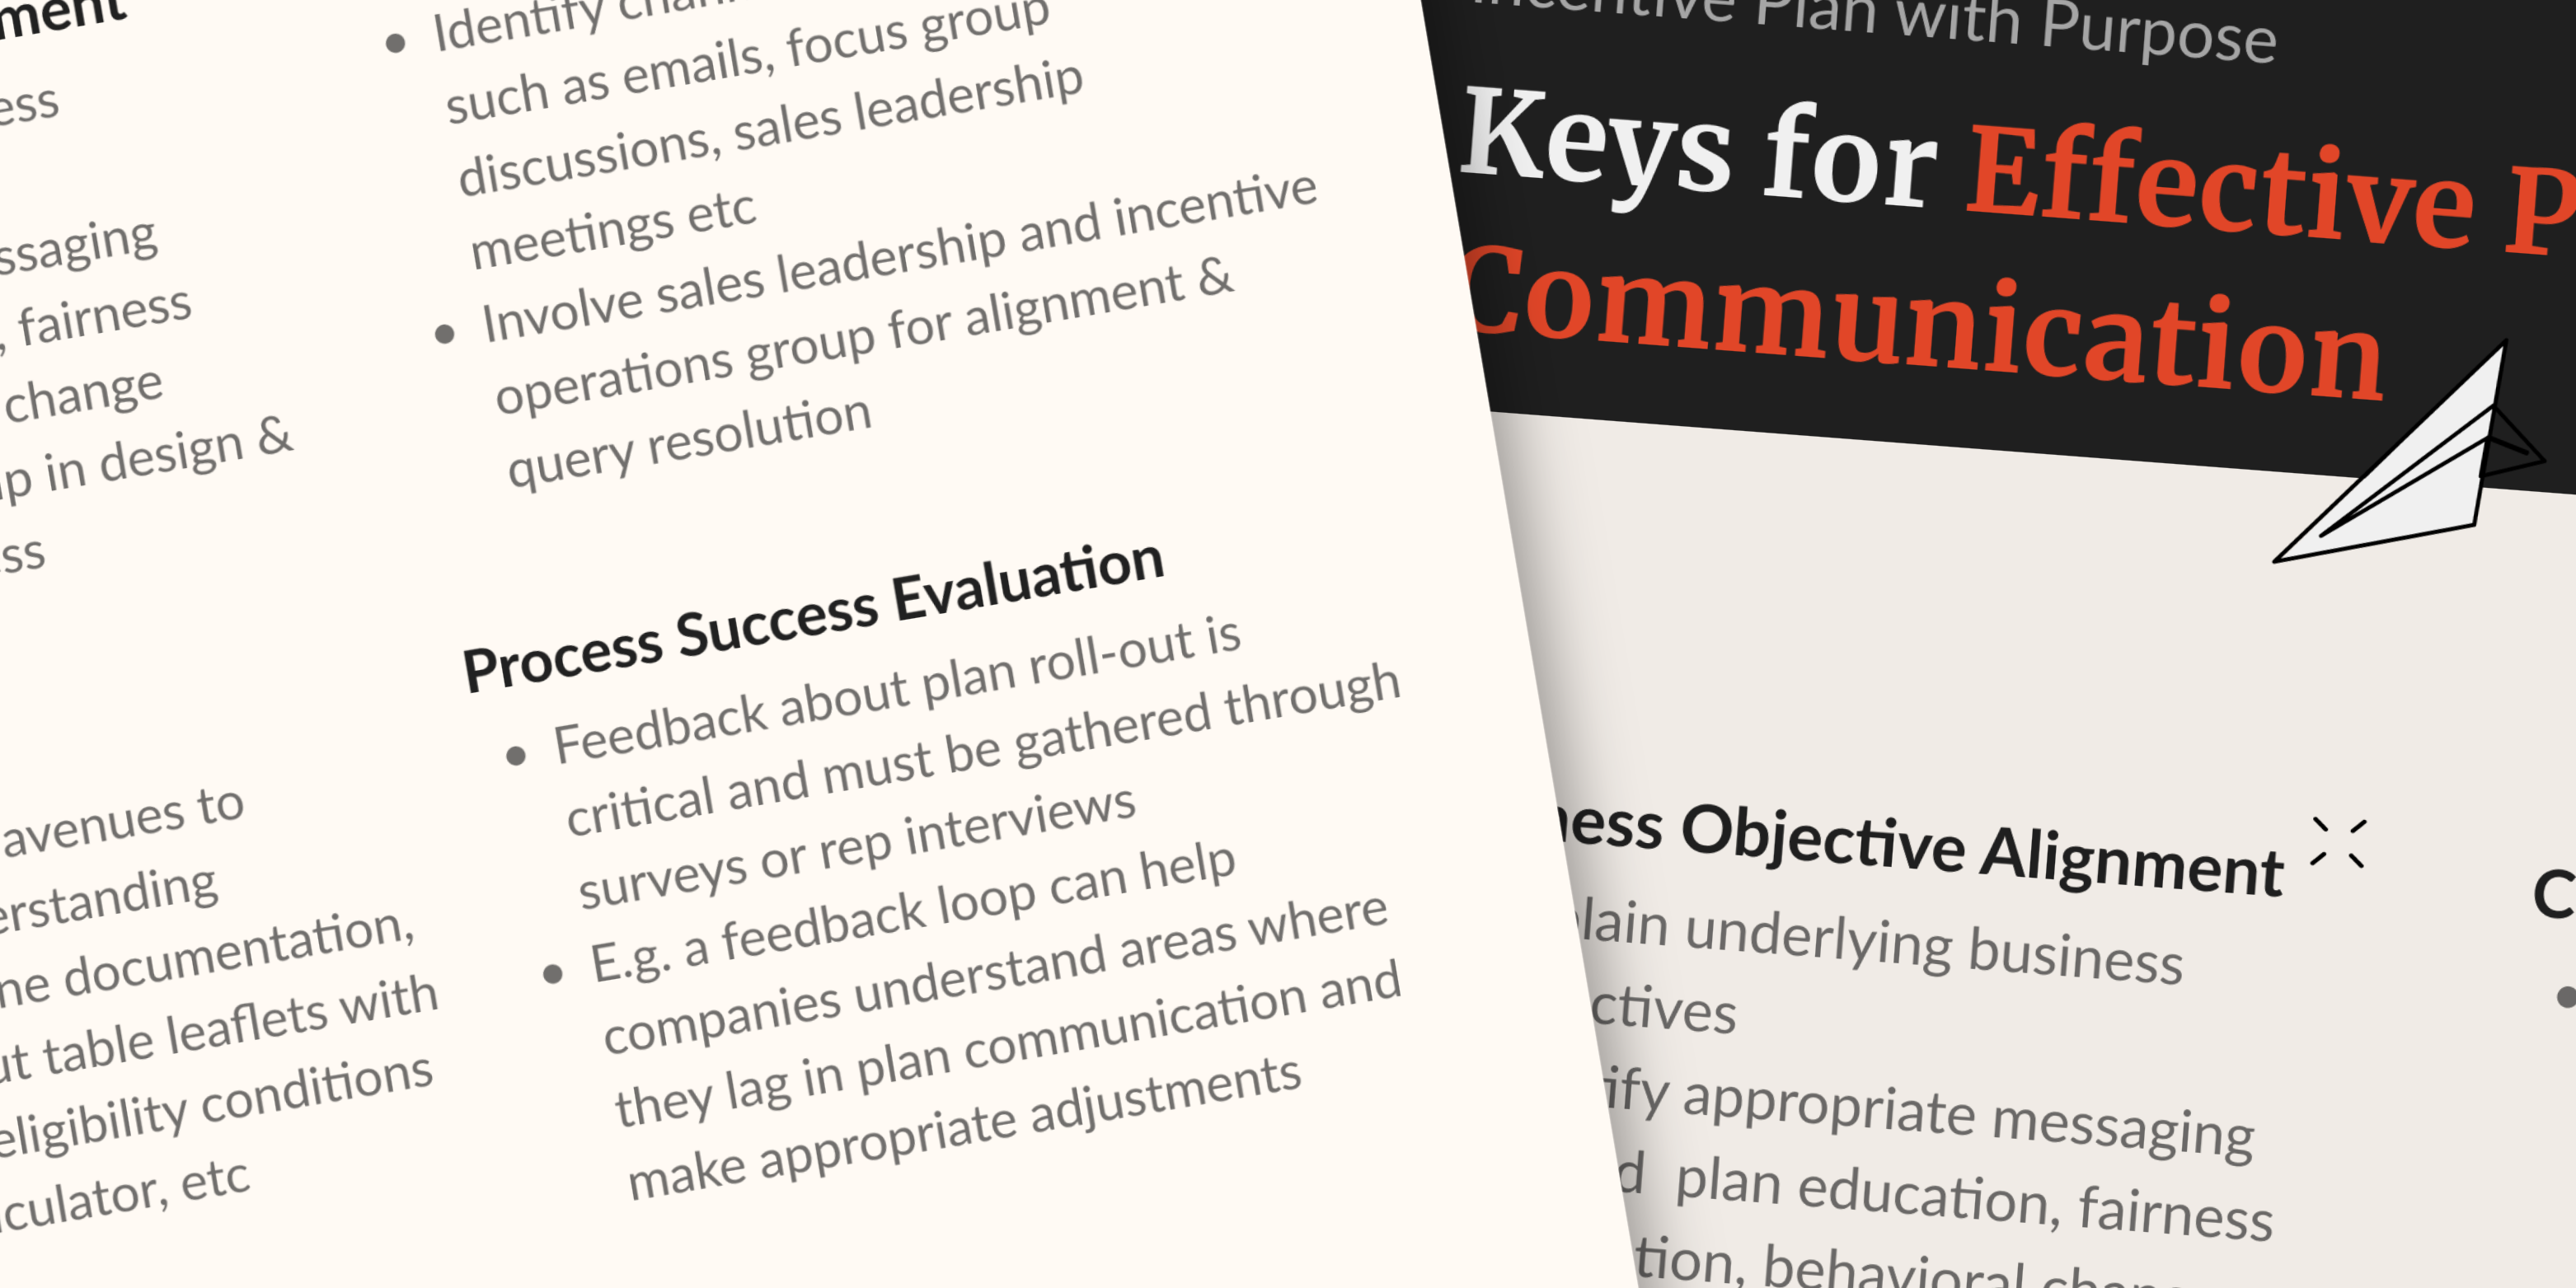 Keys for Effective Plan Communication